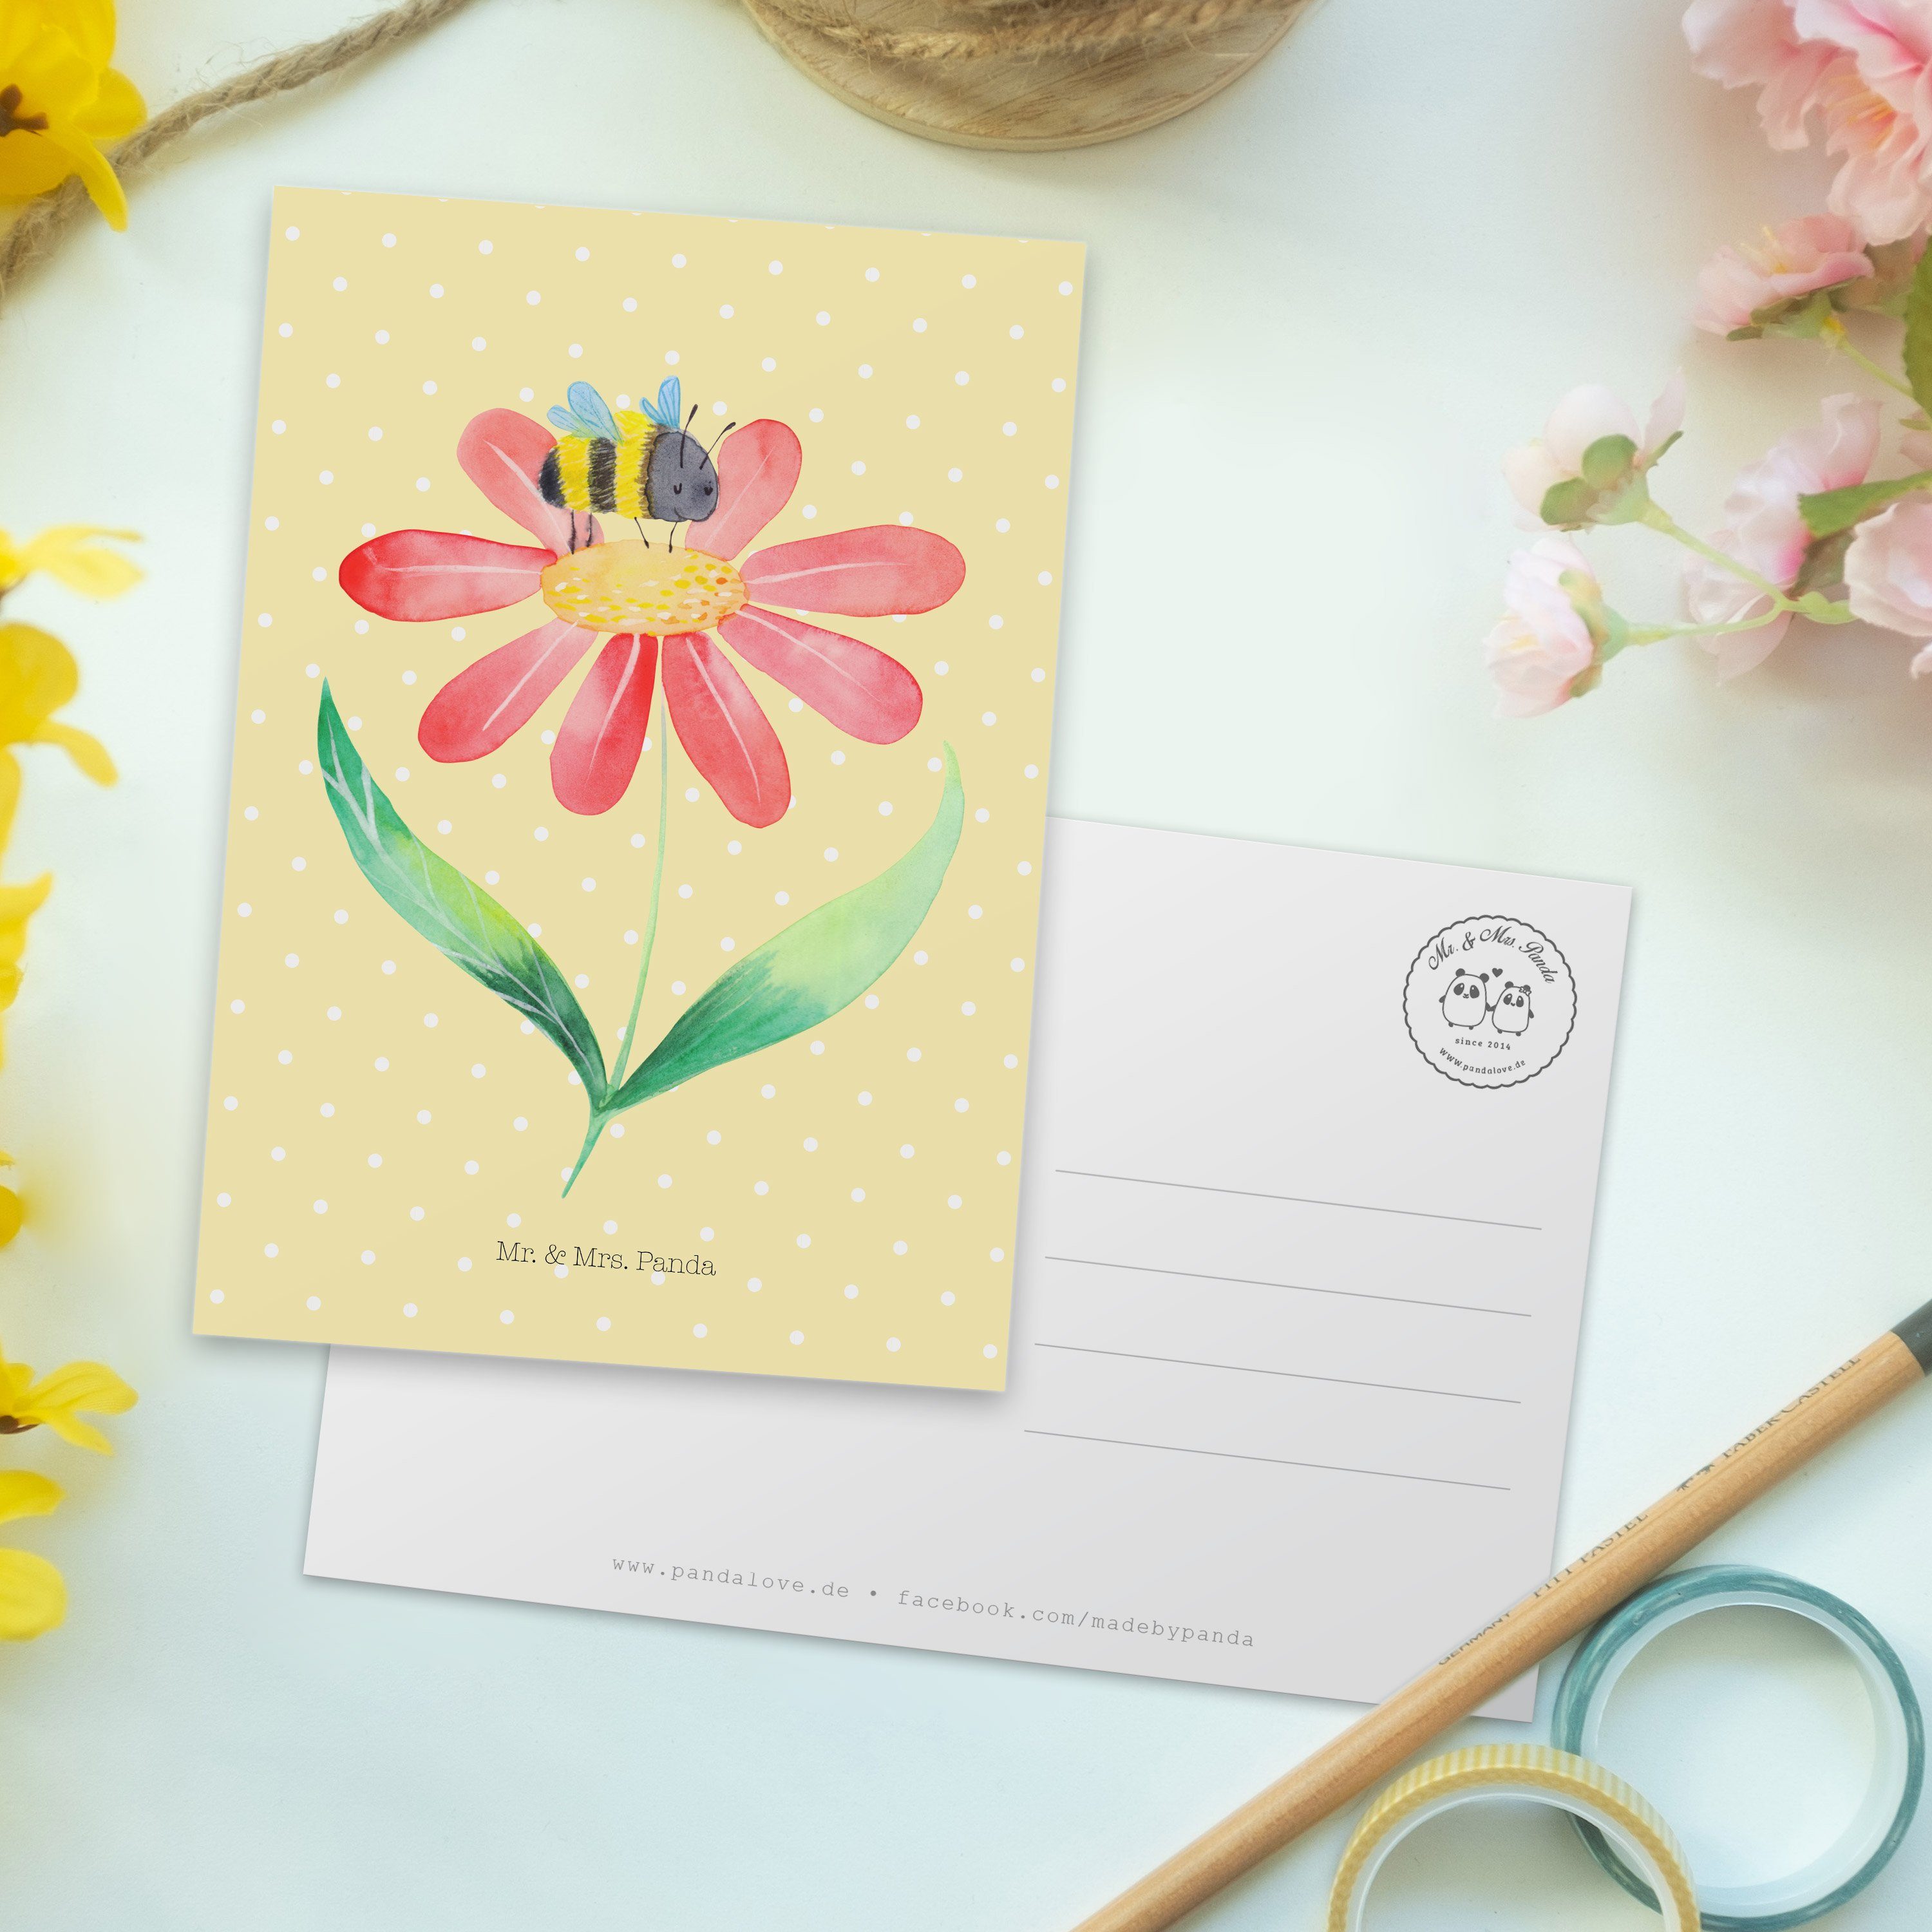 Mr. & Mrs. Tiere, Hummel Pastell - Dankeskarte, Gu - Panda Blume Postkarte Gelb Natur, Geschenk